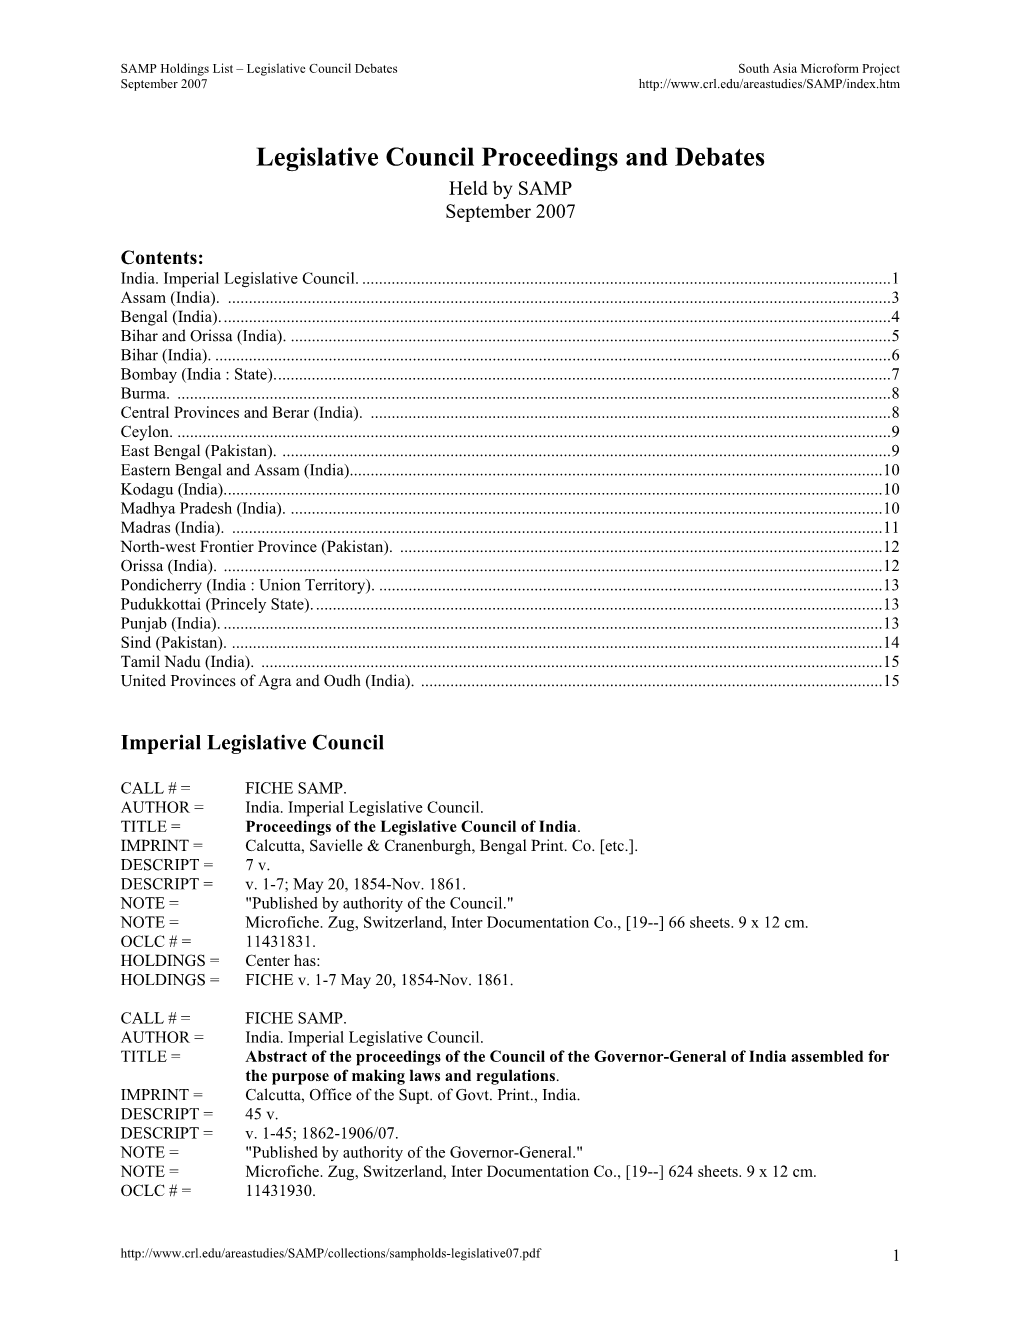 Legislative Council Proceedings and Debates Held by SAMP September 2007